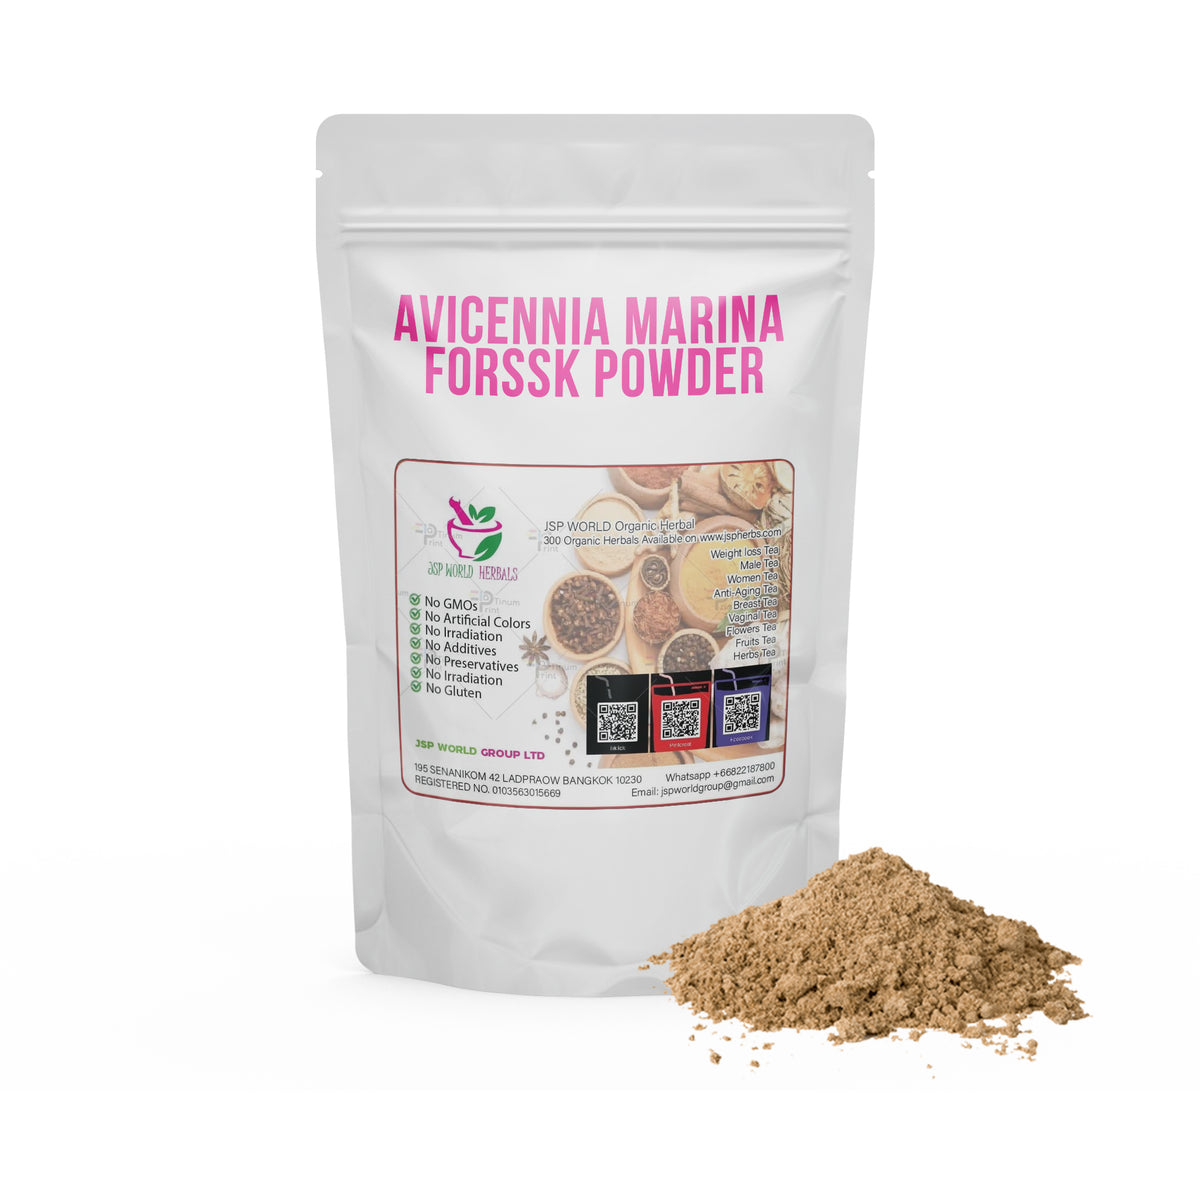 Avicennia marina Forssk Powder 100 Grams 100% Organic Authenic